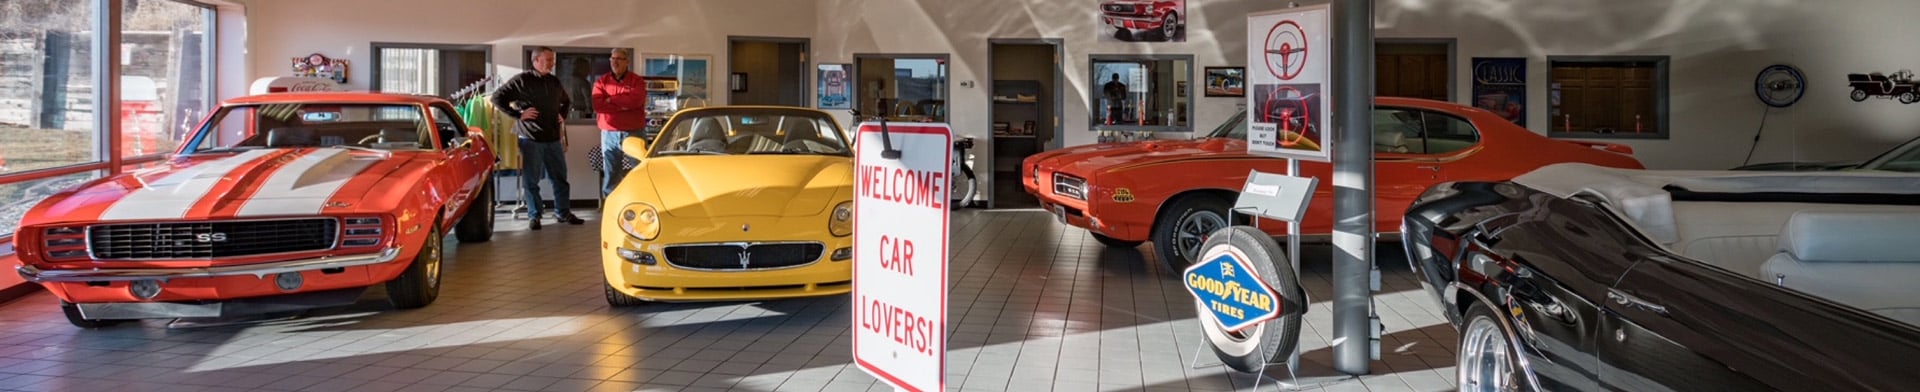 Duffy's Classic Cars showroom